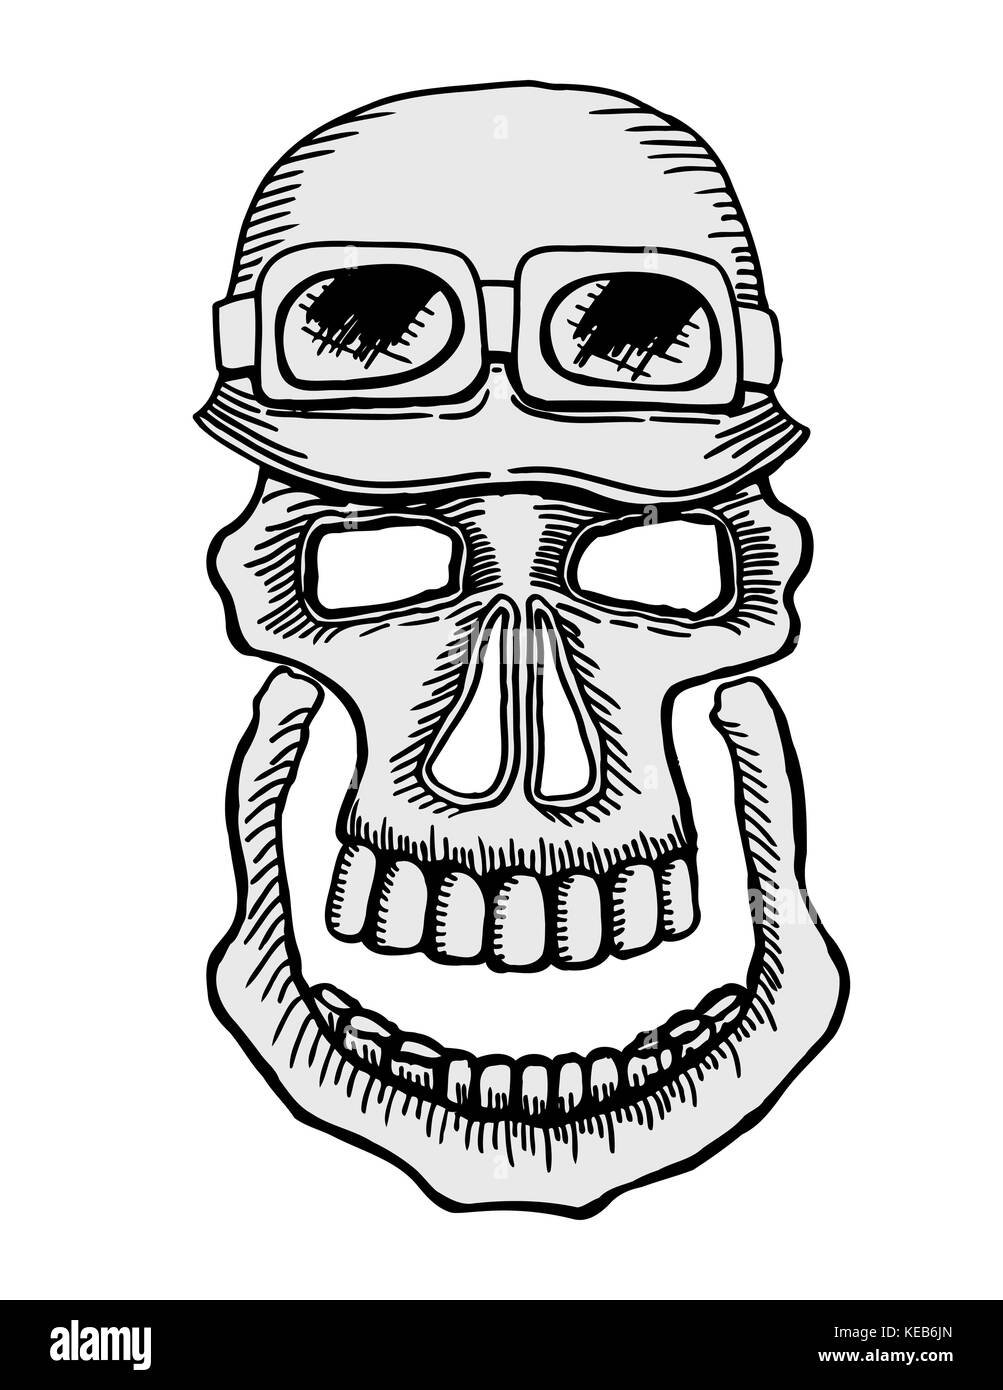 Skull emblem motorcycle helmet and motorcycle glasses on a white background. Symbol brutal biker subculture. Vector t-shirt design Stock Vector